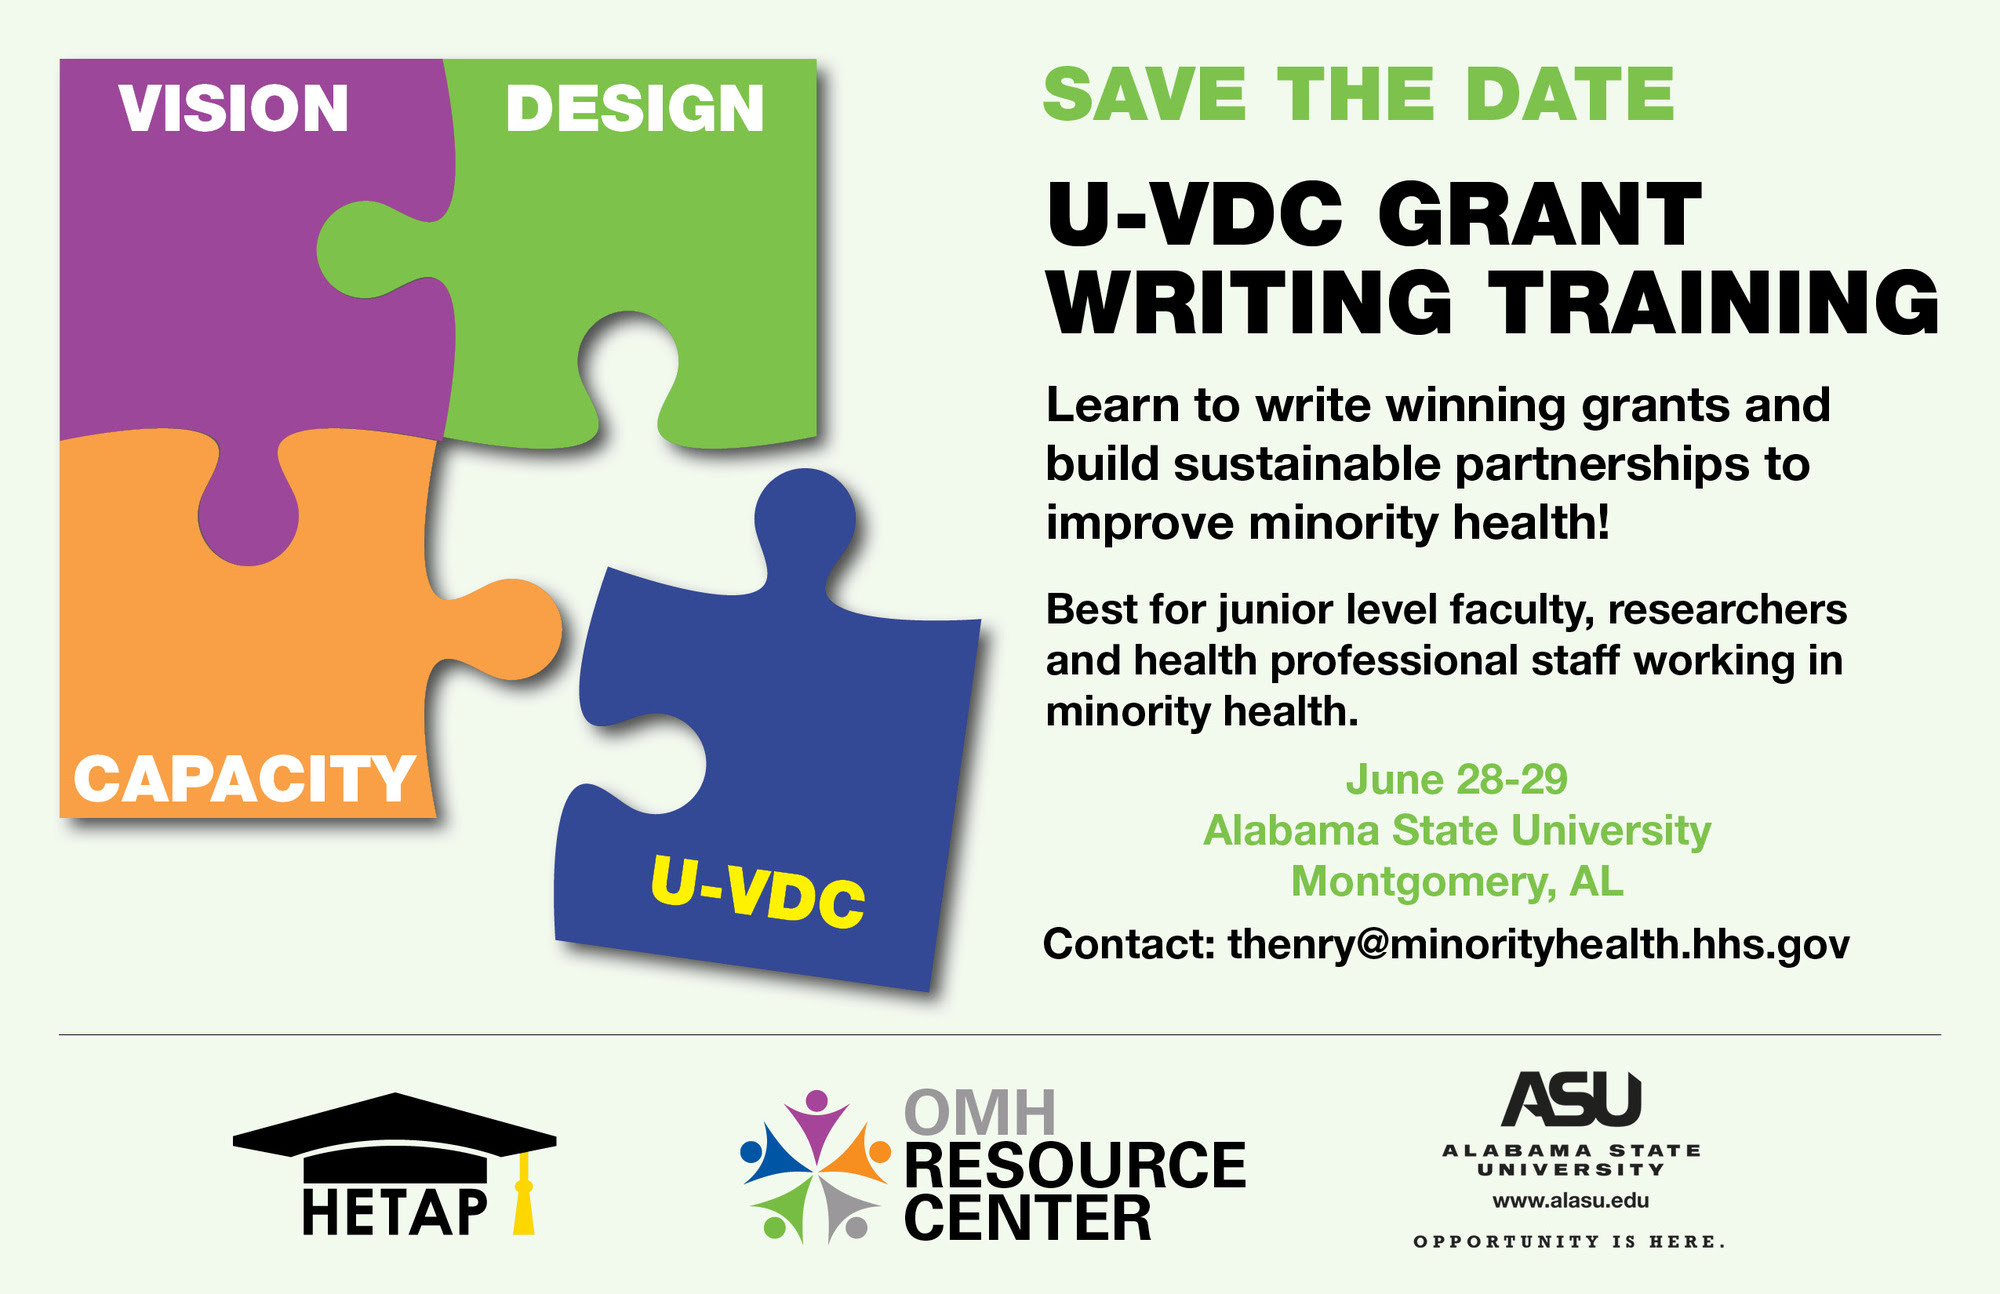 U-VDC Grant Writing Training June 28-29